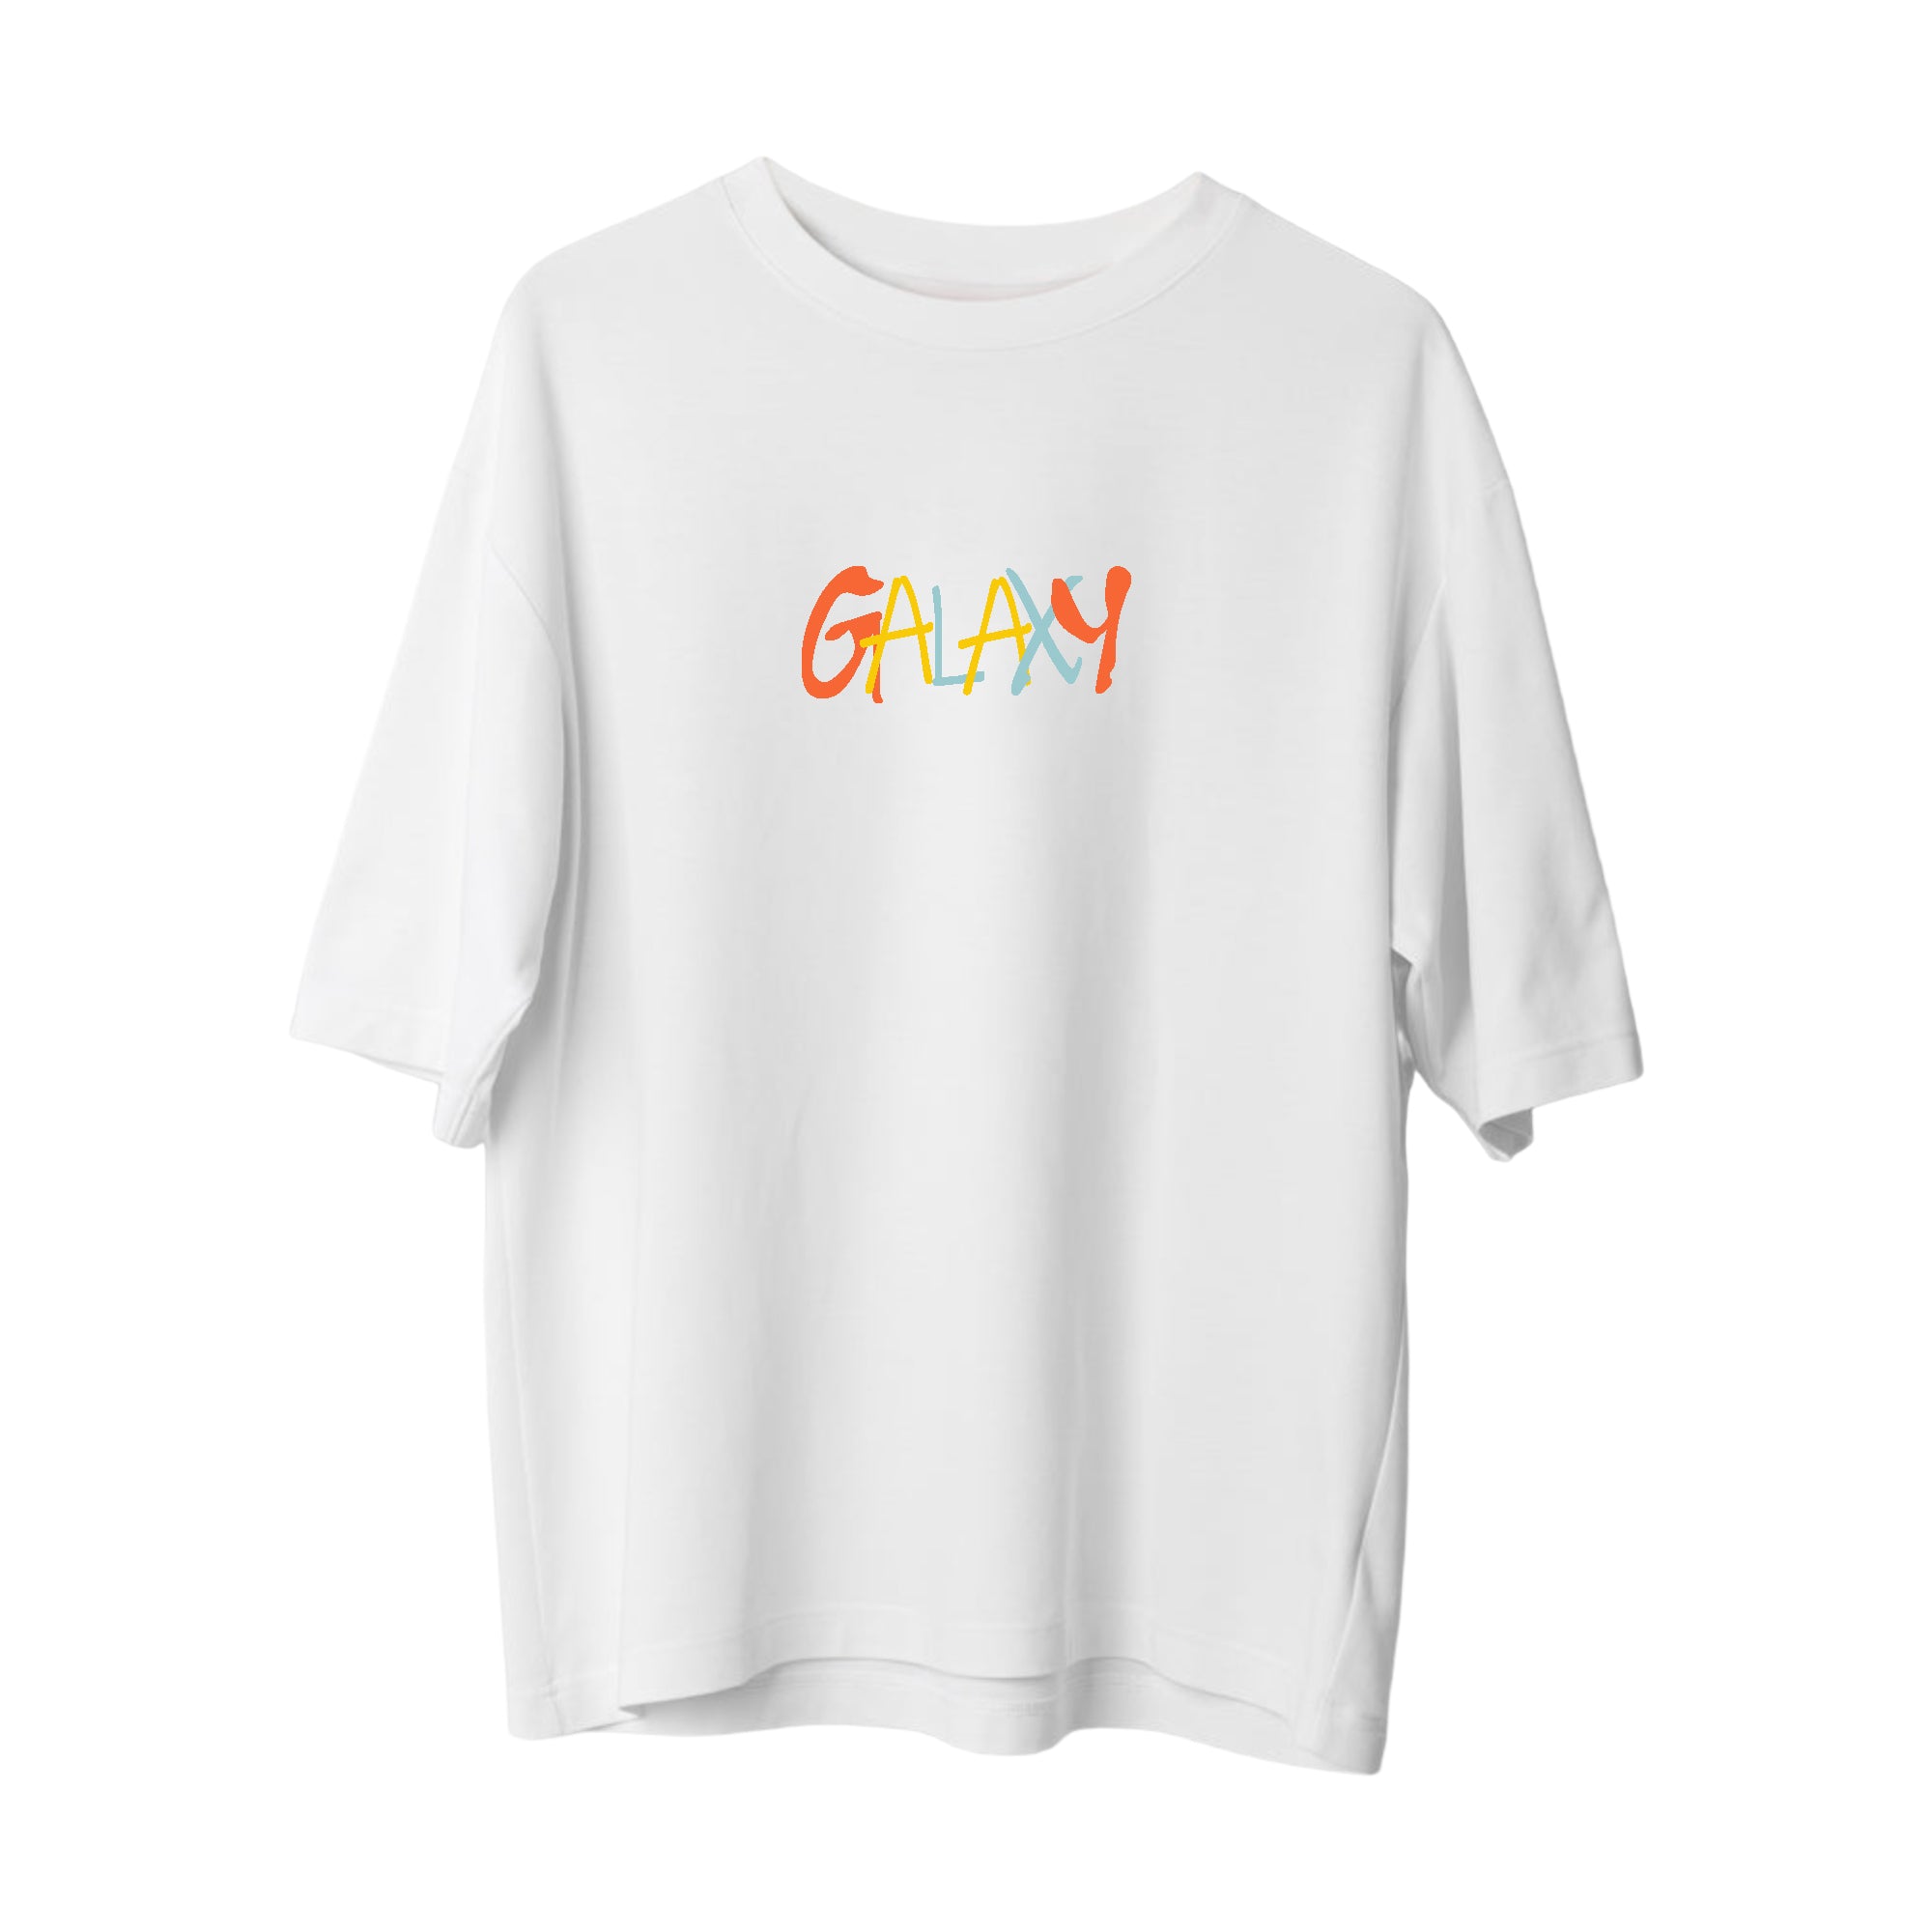 Galaxy- Oversize T-Shirt